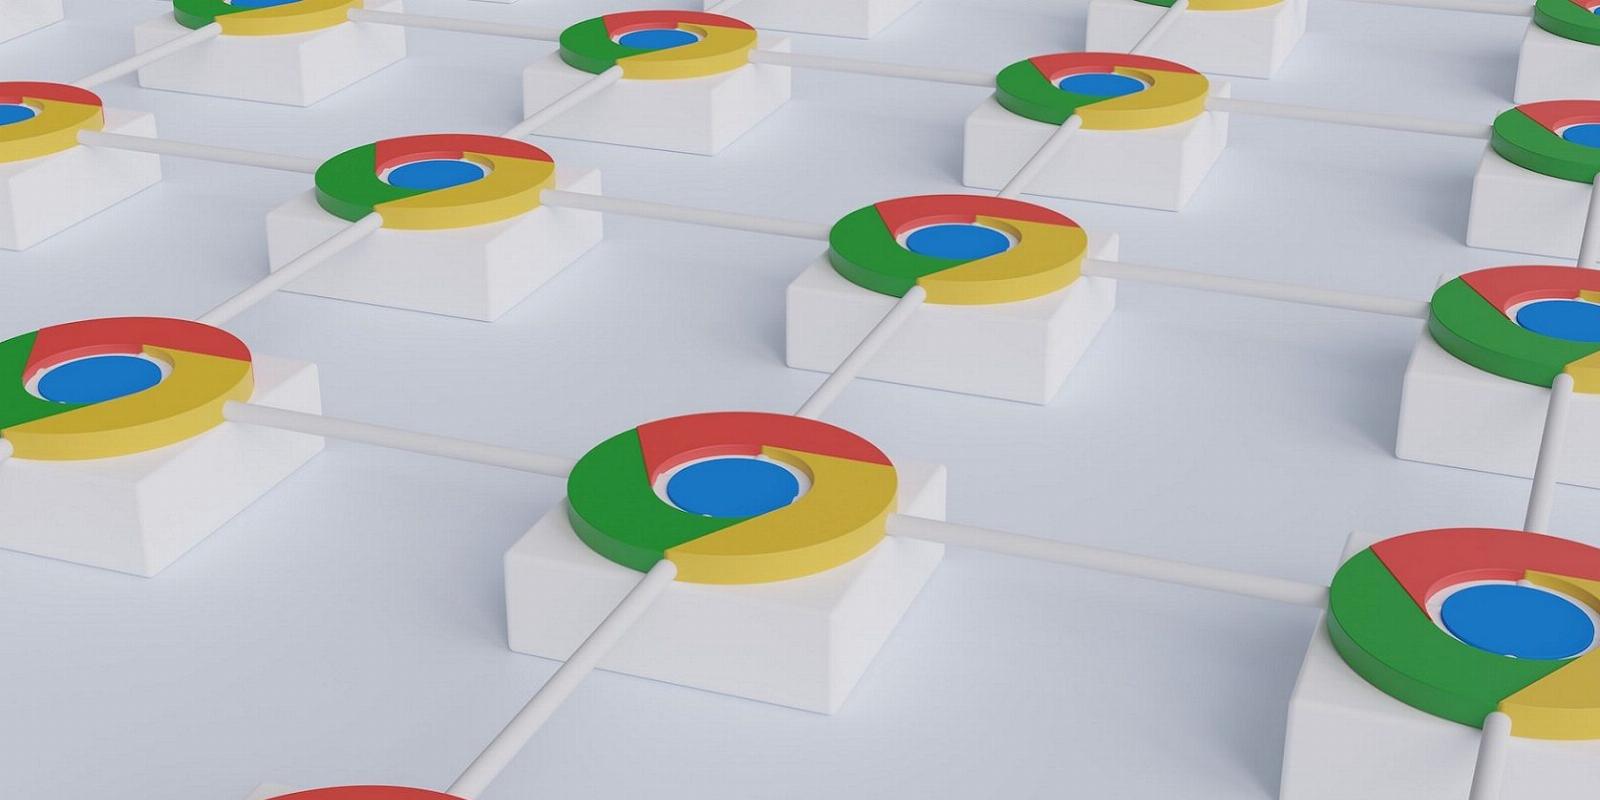 How to Change Google Chrome’s Color Scheme